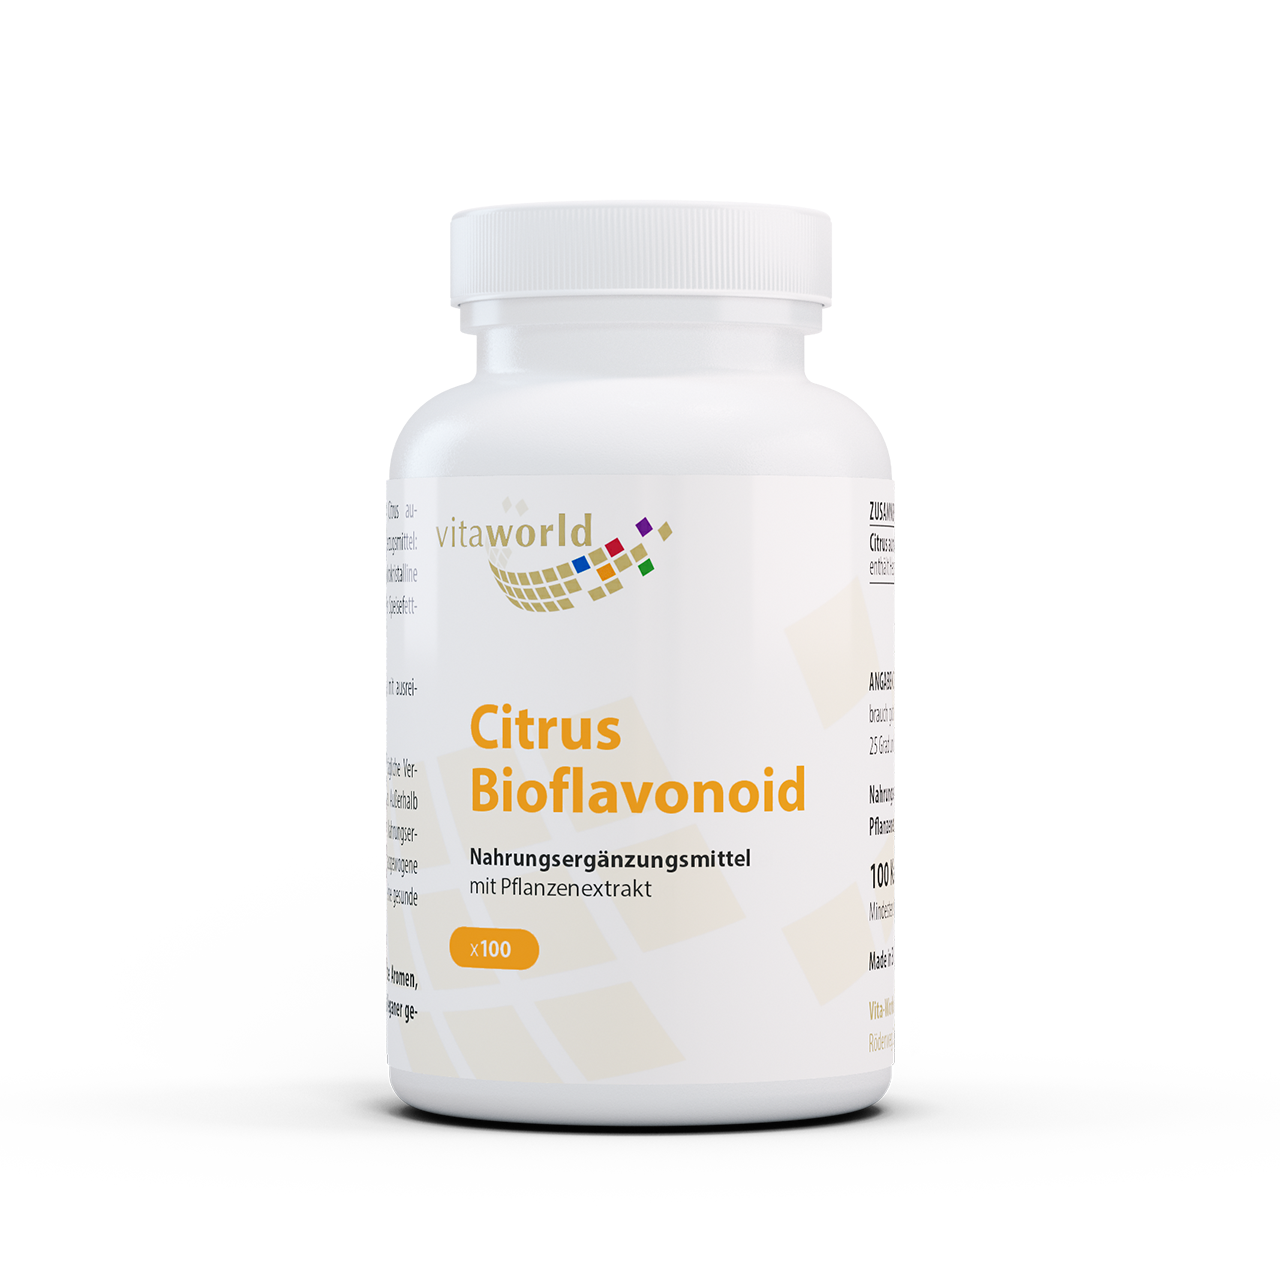 Vitaworld Citrus Bioflavonoid | 100 Kapseln | 100 % Hesperidin aus der Bitterorange | vegan | gluten- und laktosefrei